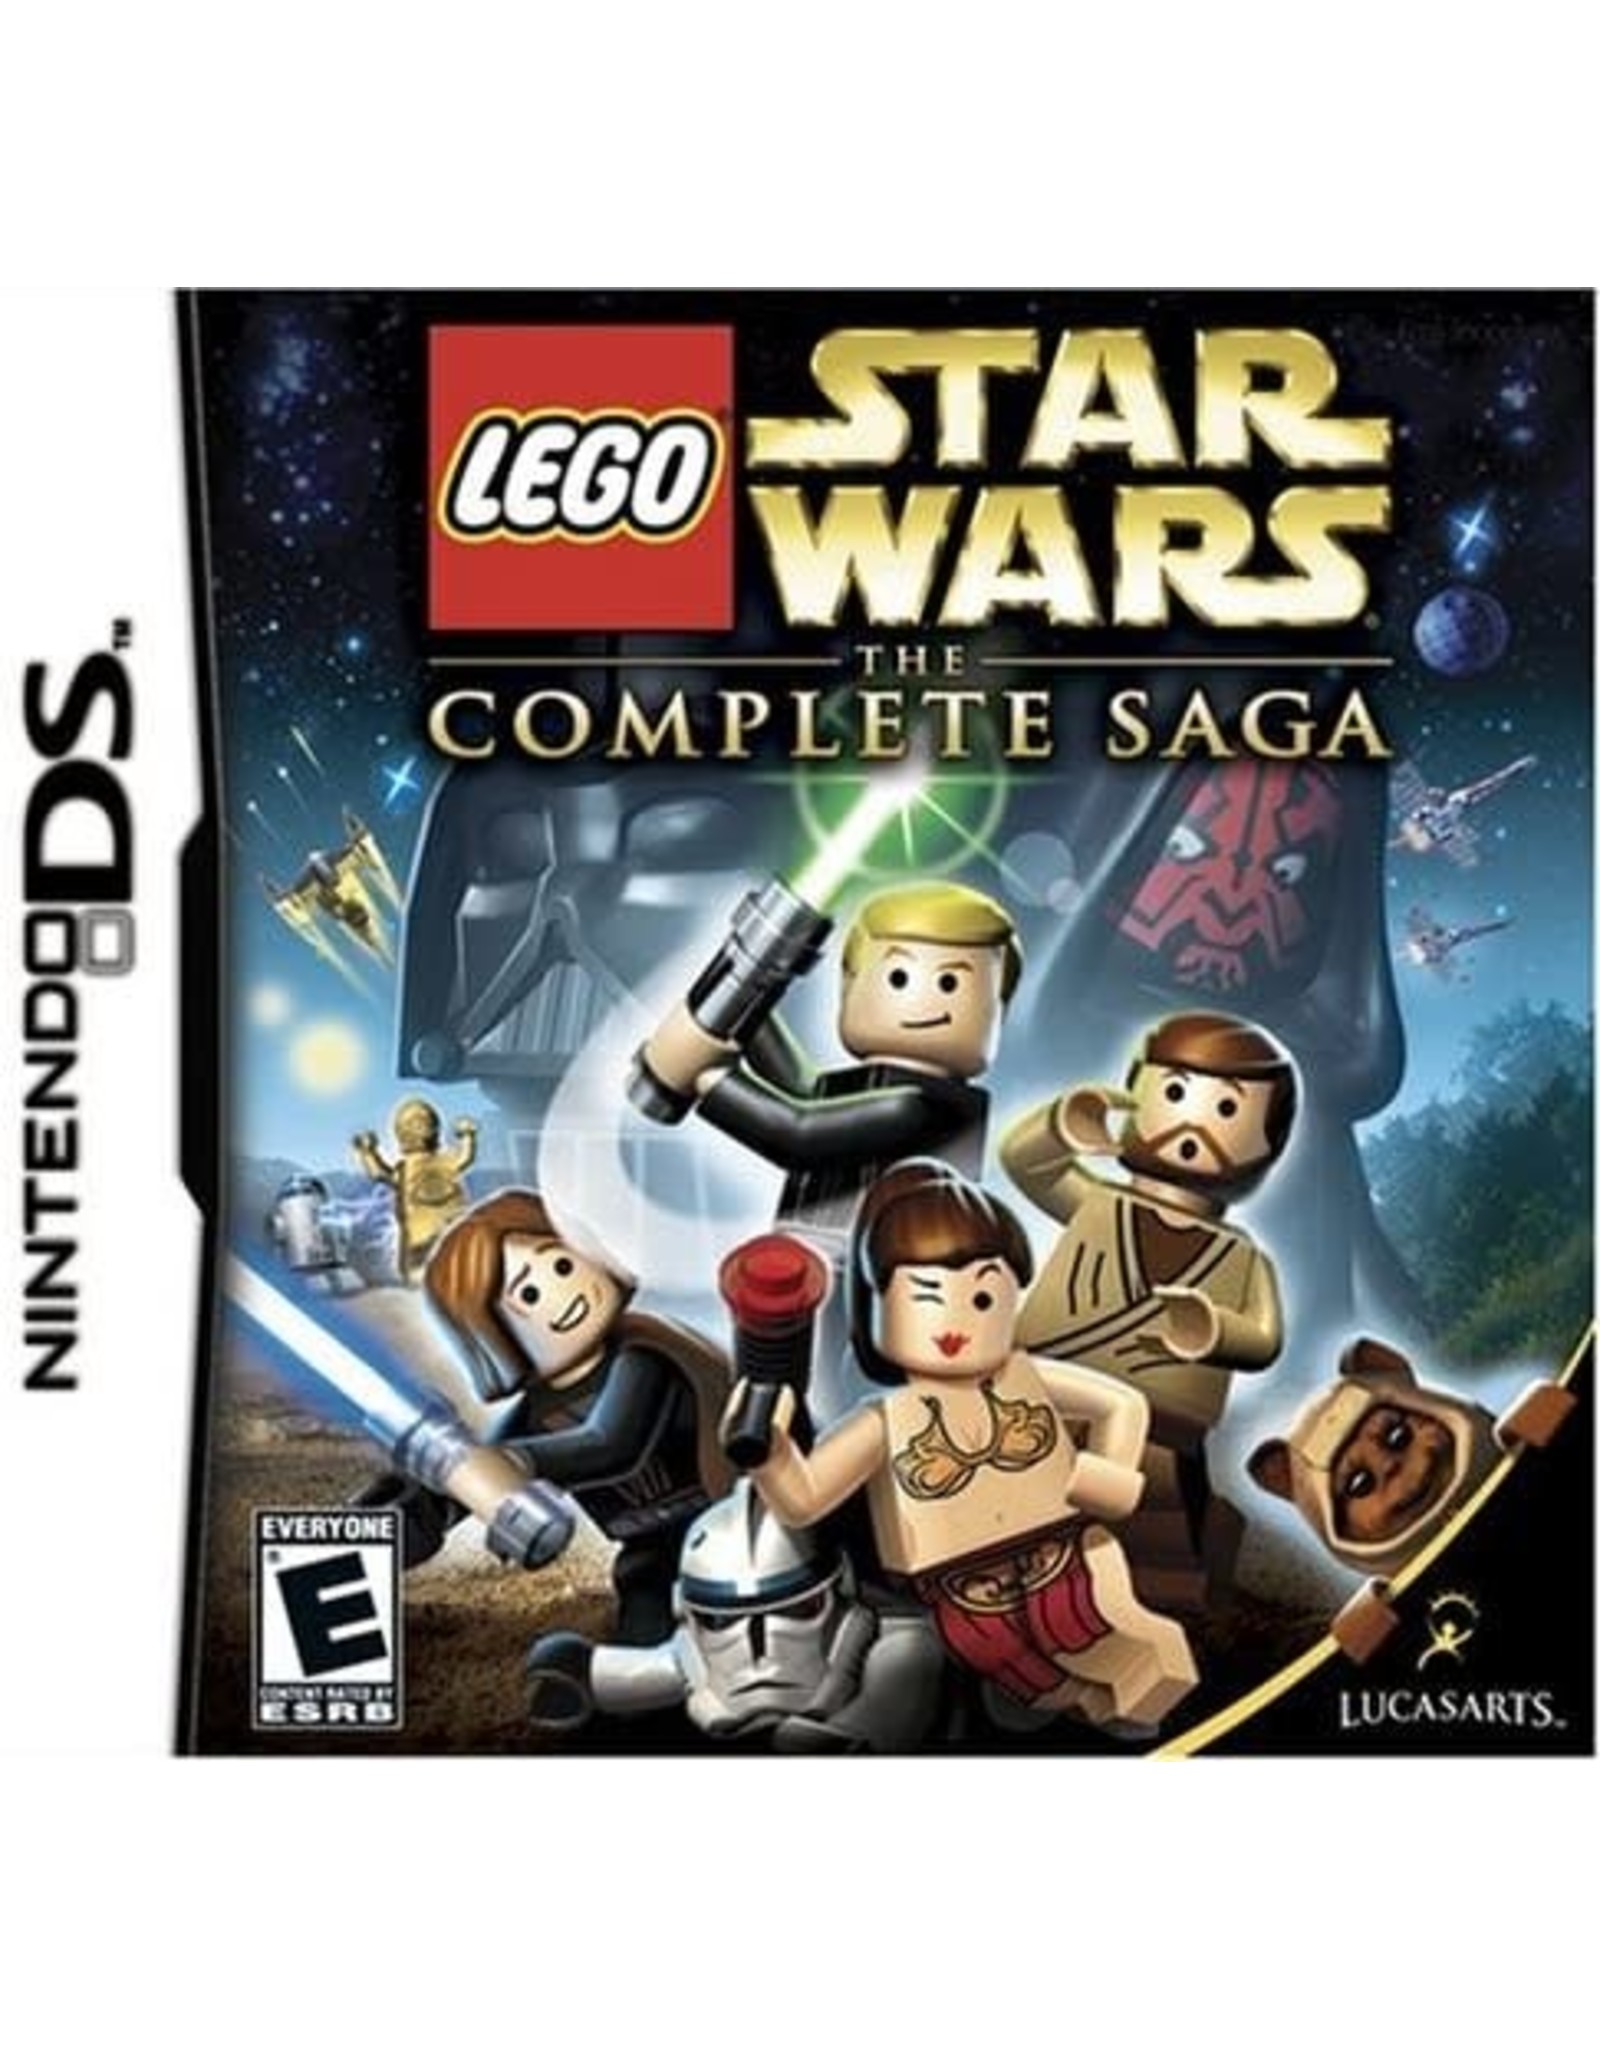 Nintendo DS LEGO Star Wars Complete Saga (Cart Only)